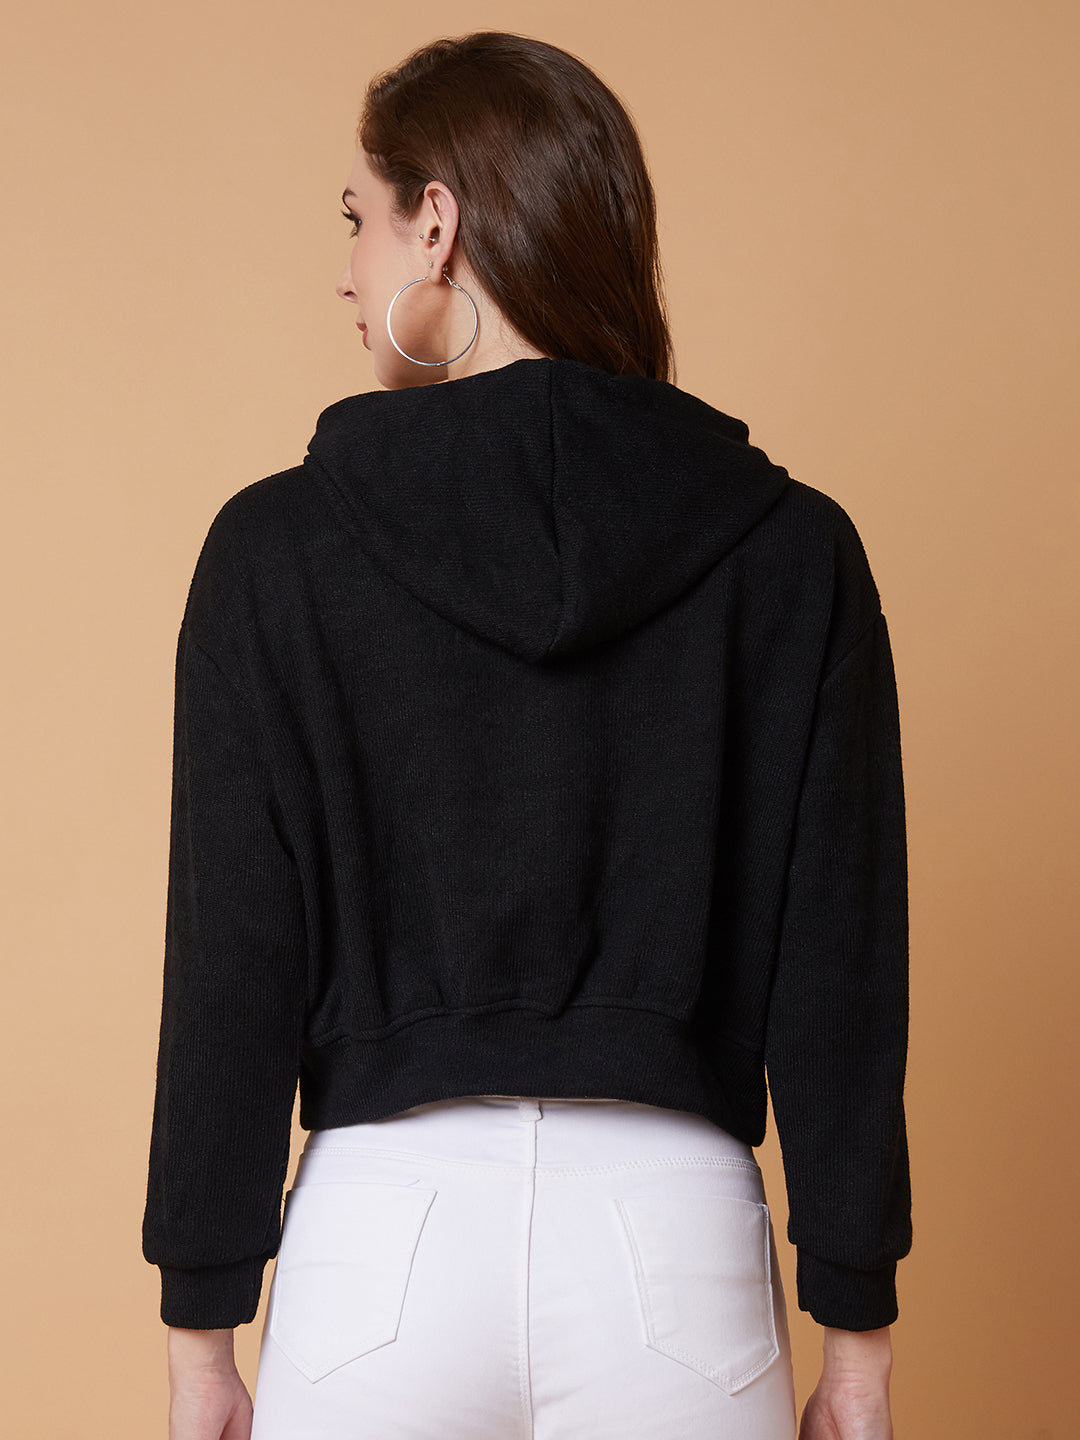 Women Solid Black Hooded Sweatshirt